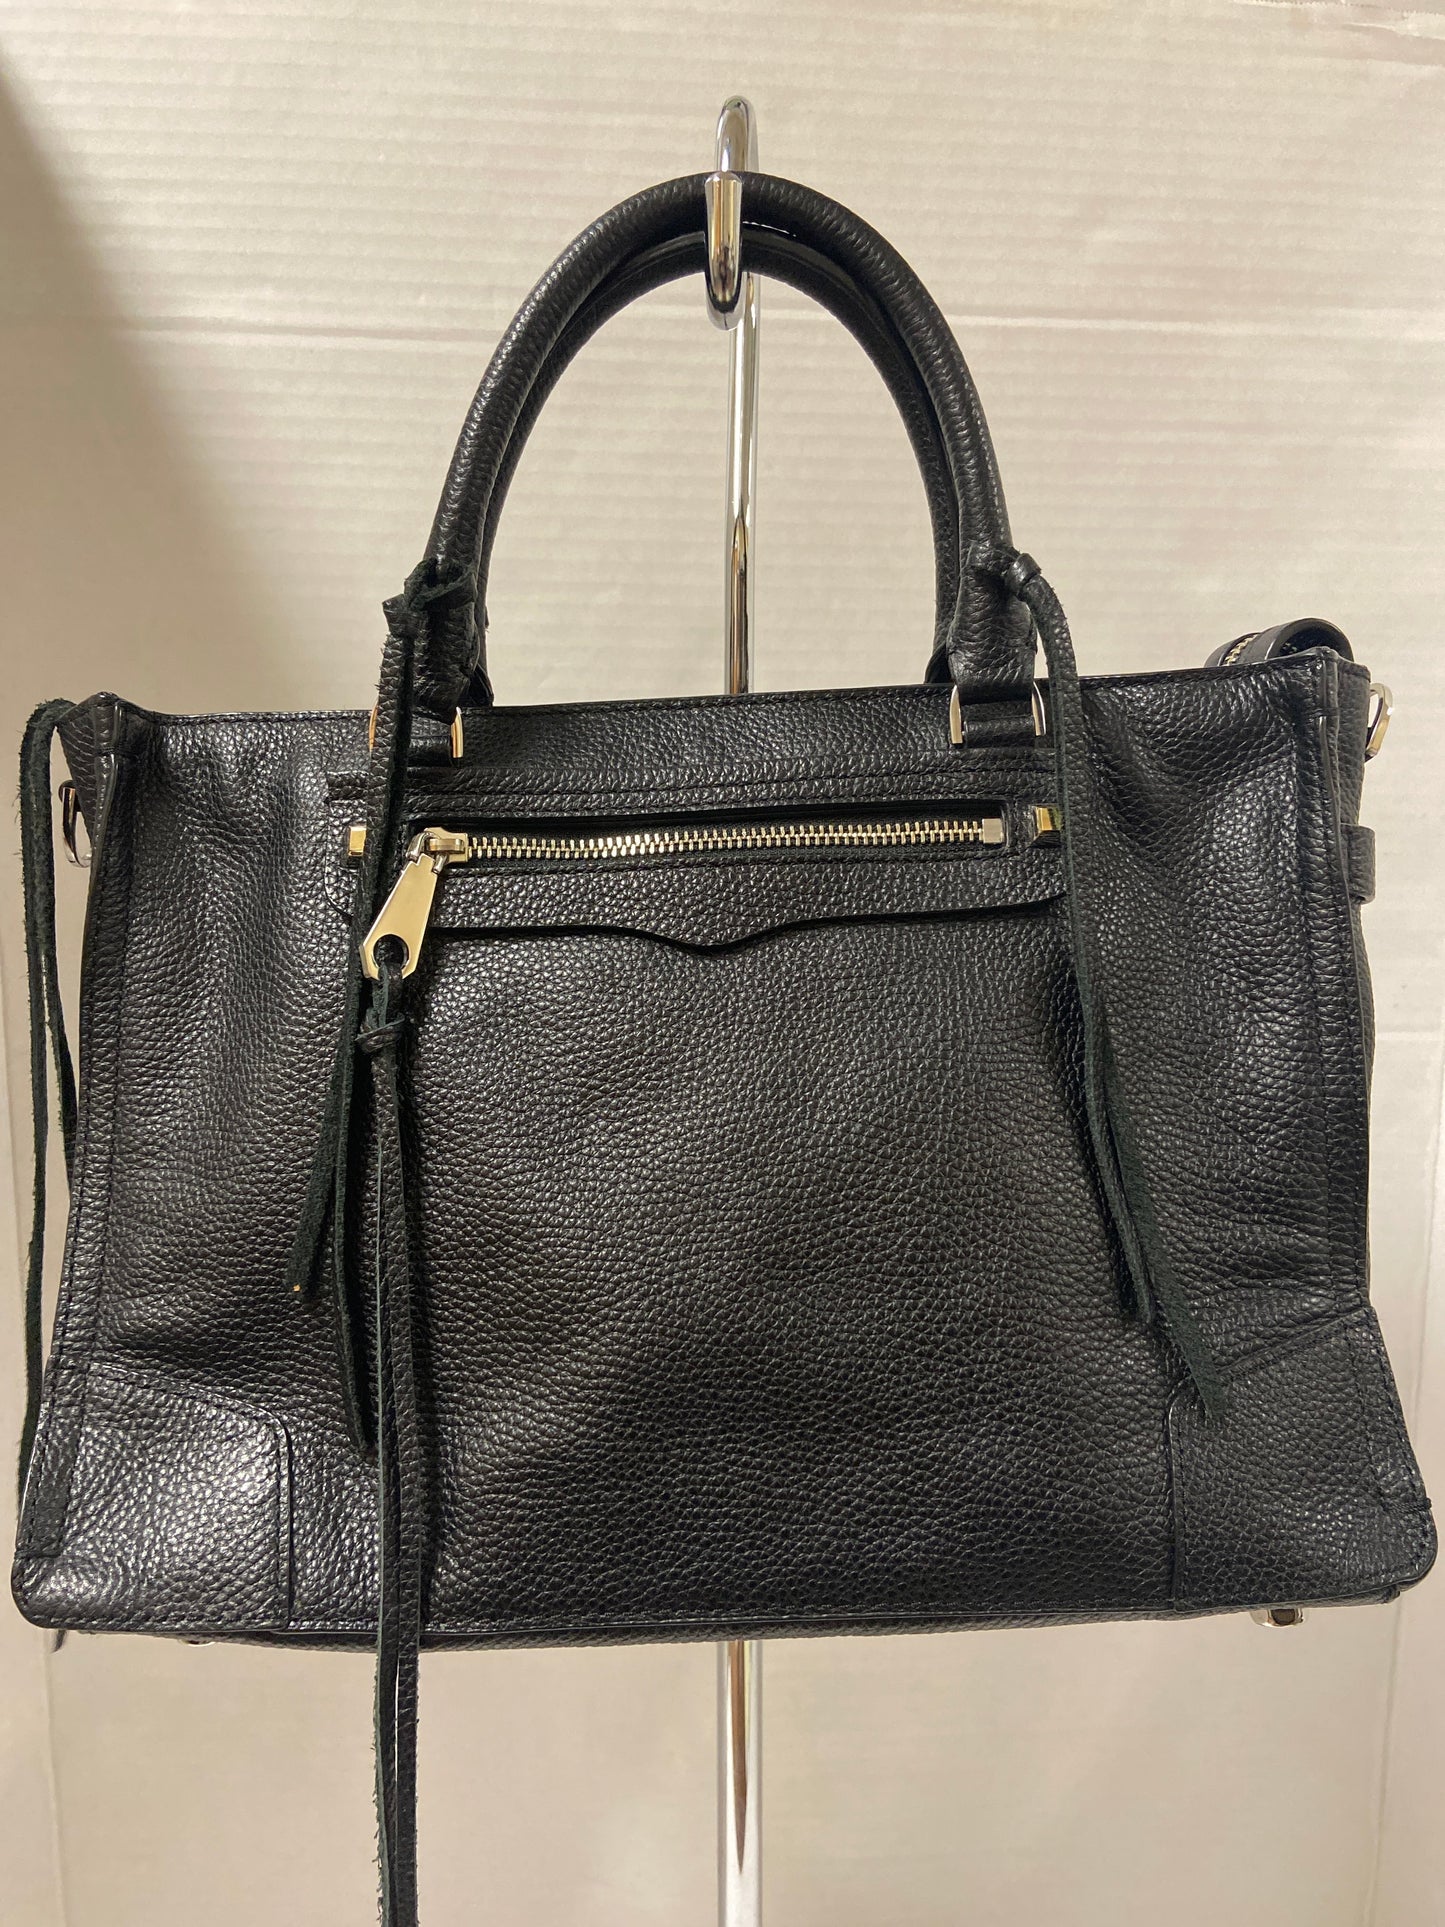 Handbag By Rebecca Minkoff  Size: Large